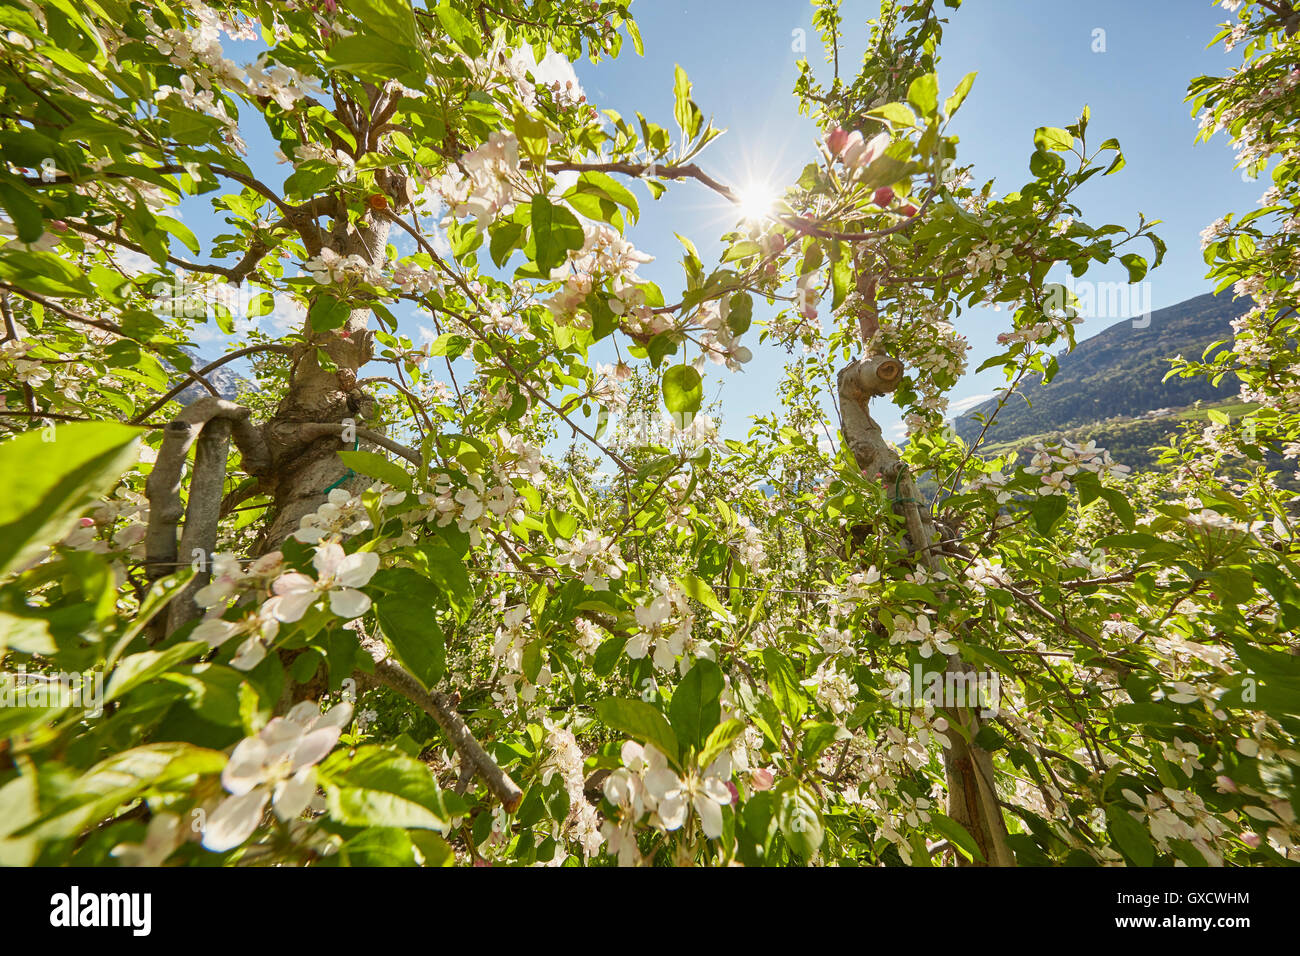 Apple trees in flower, Meran, South Tyrol, Italy Stock Photo